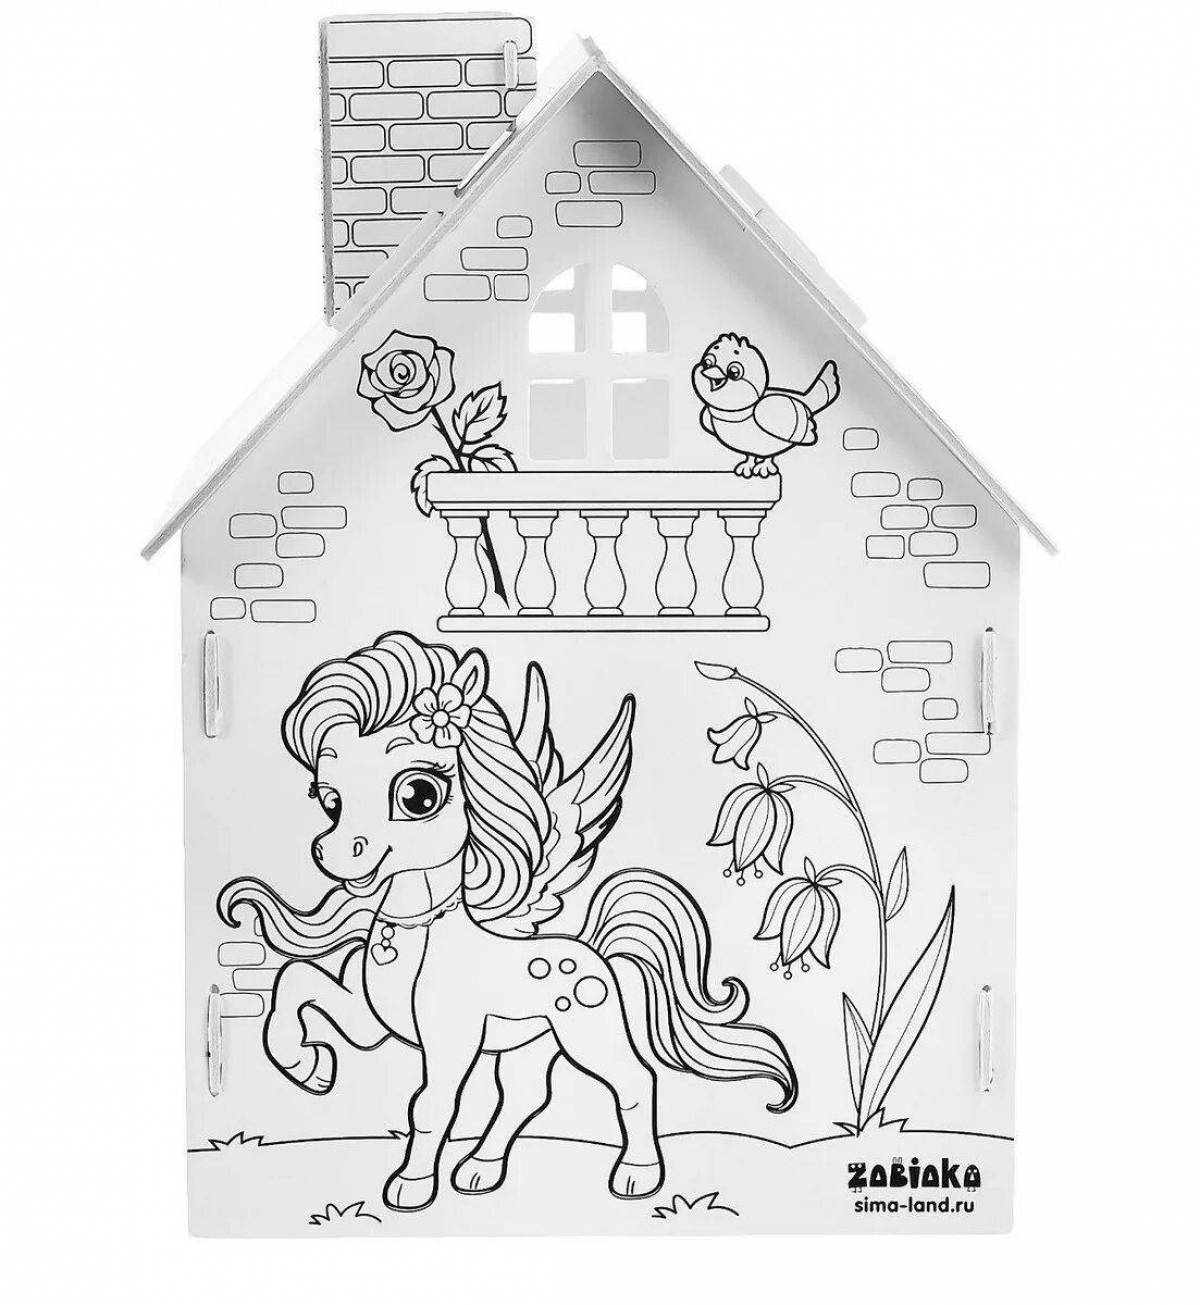 Humorous princess house coloring book for kids